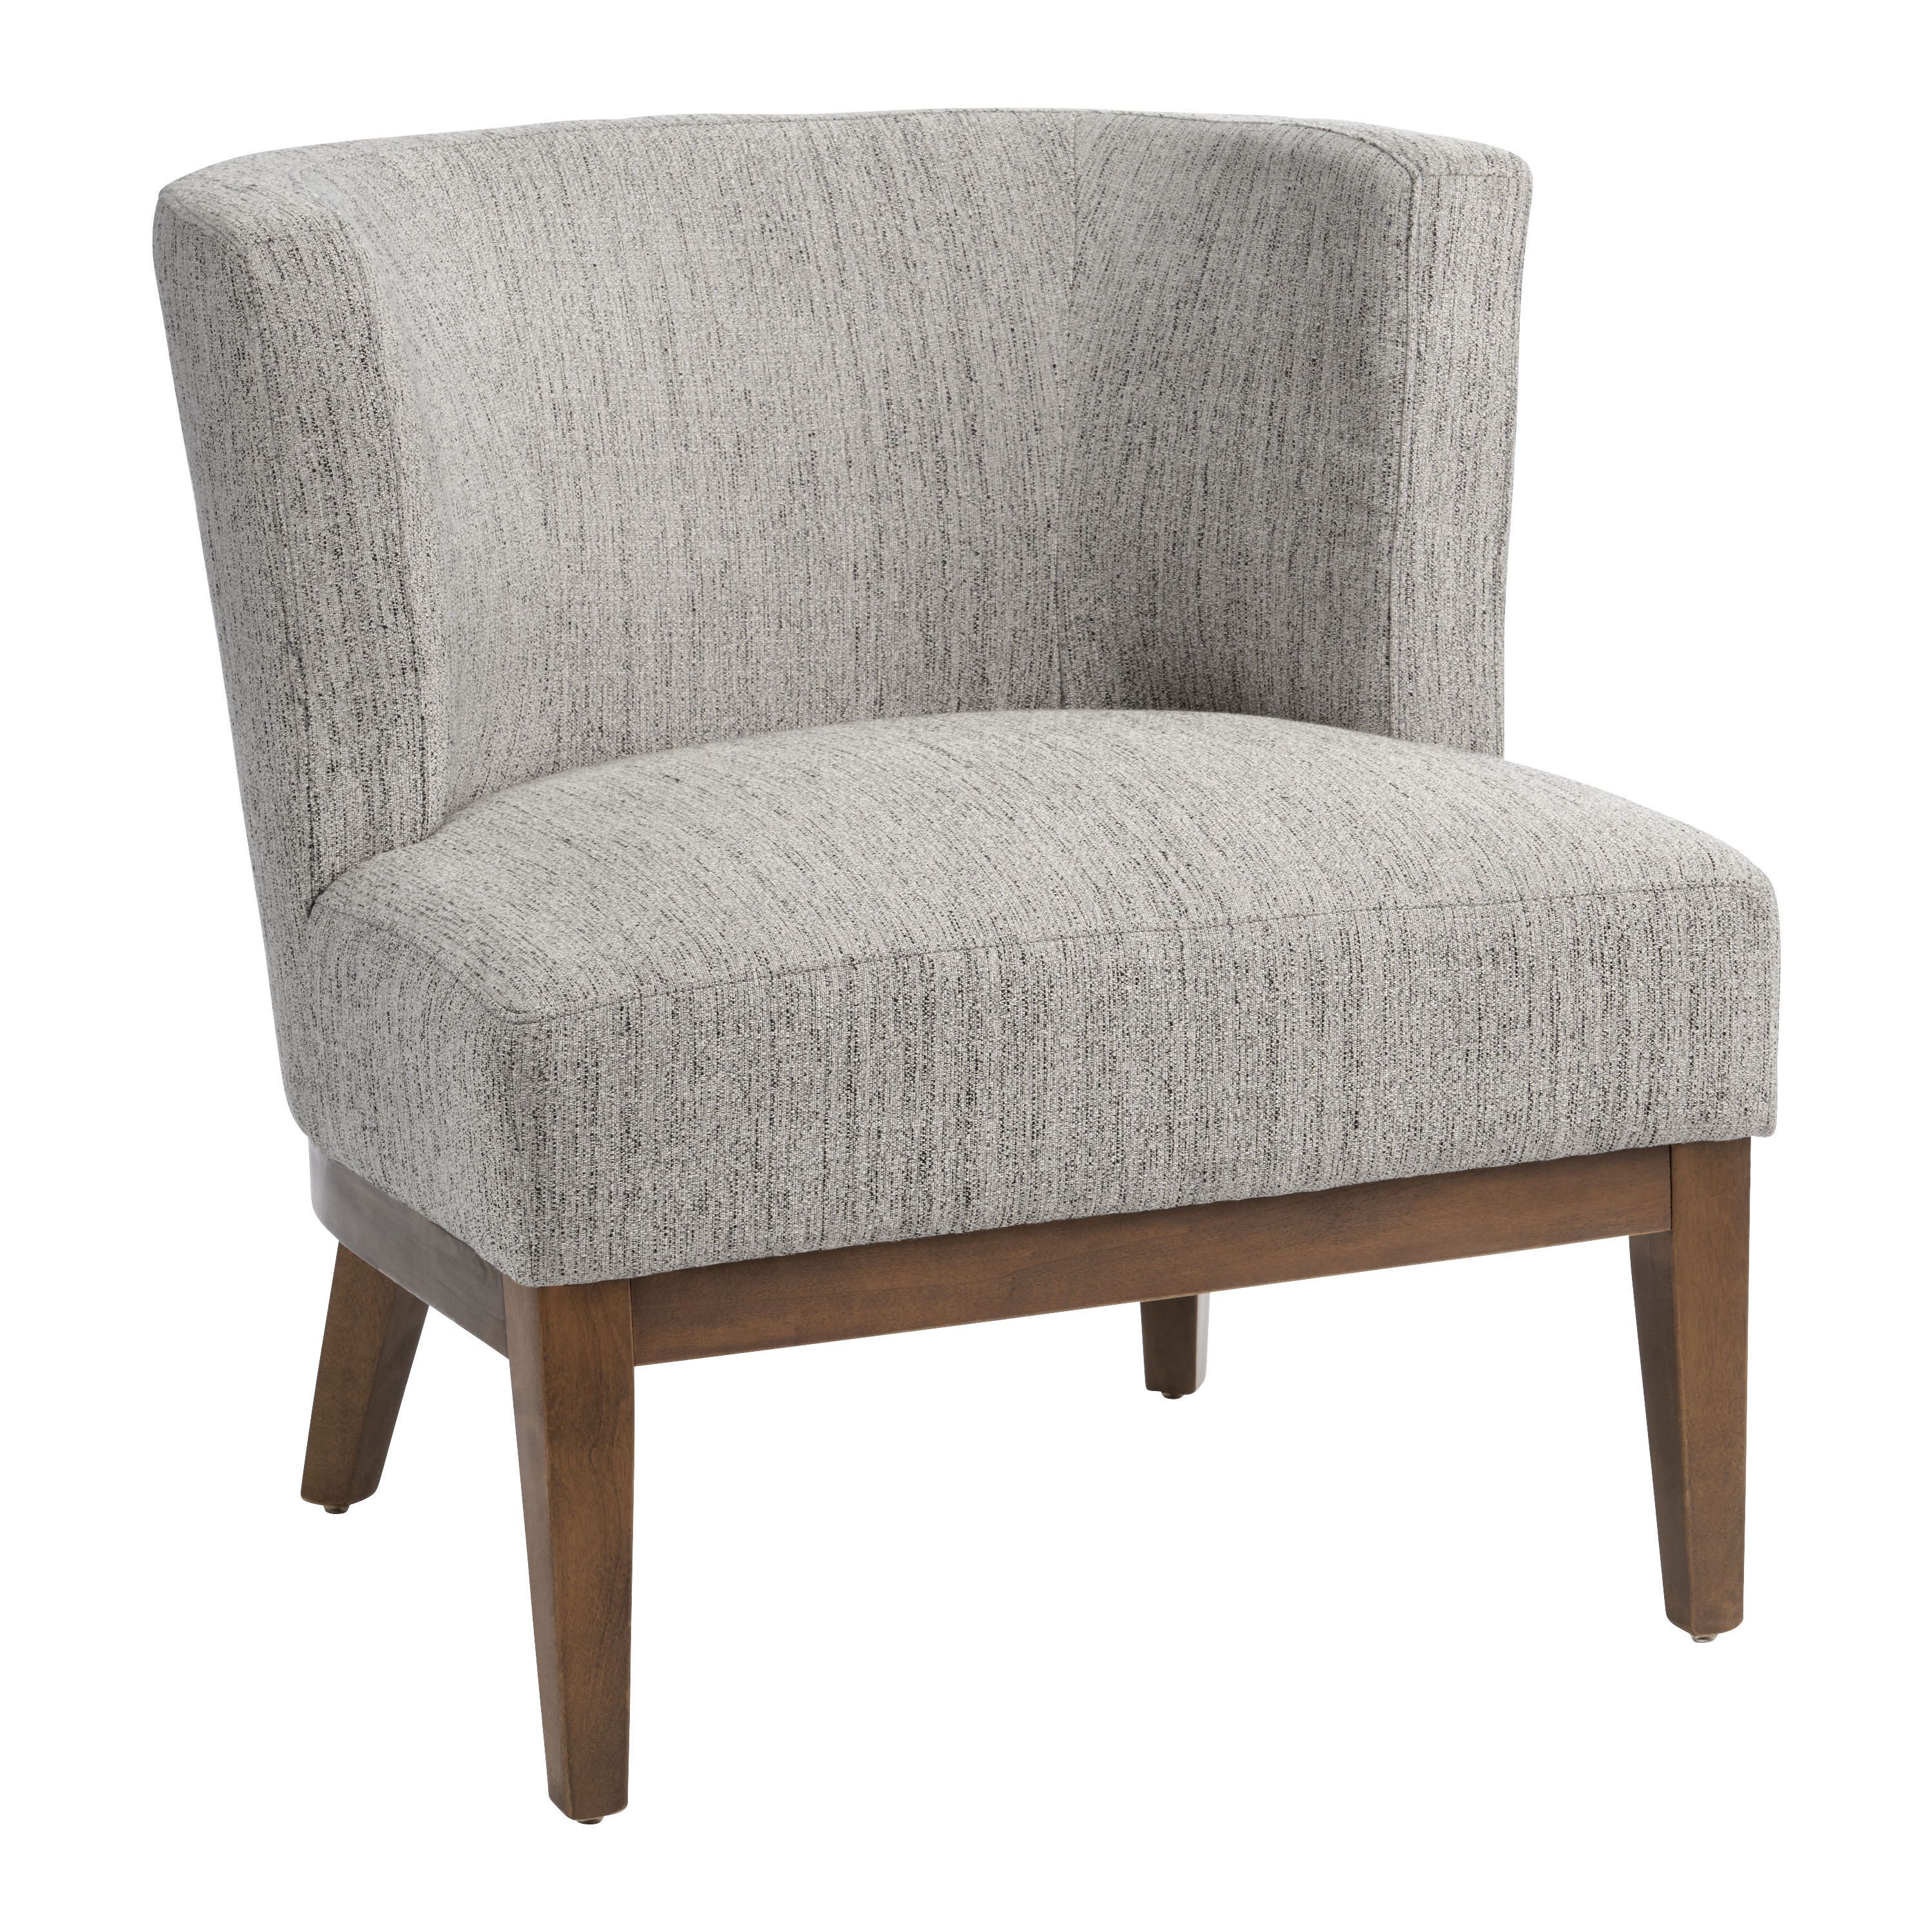 Jaden Gray Tweed Curved Back Chair | World Market